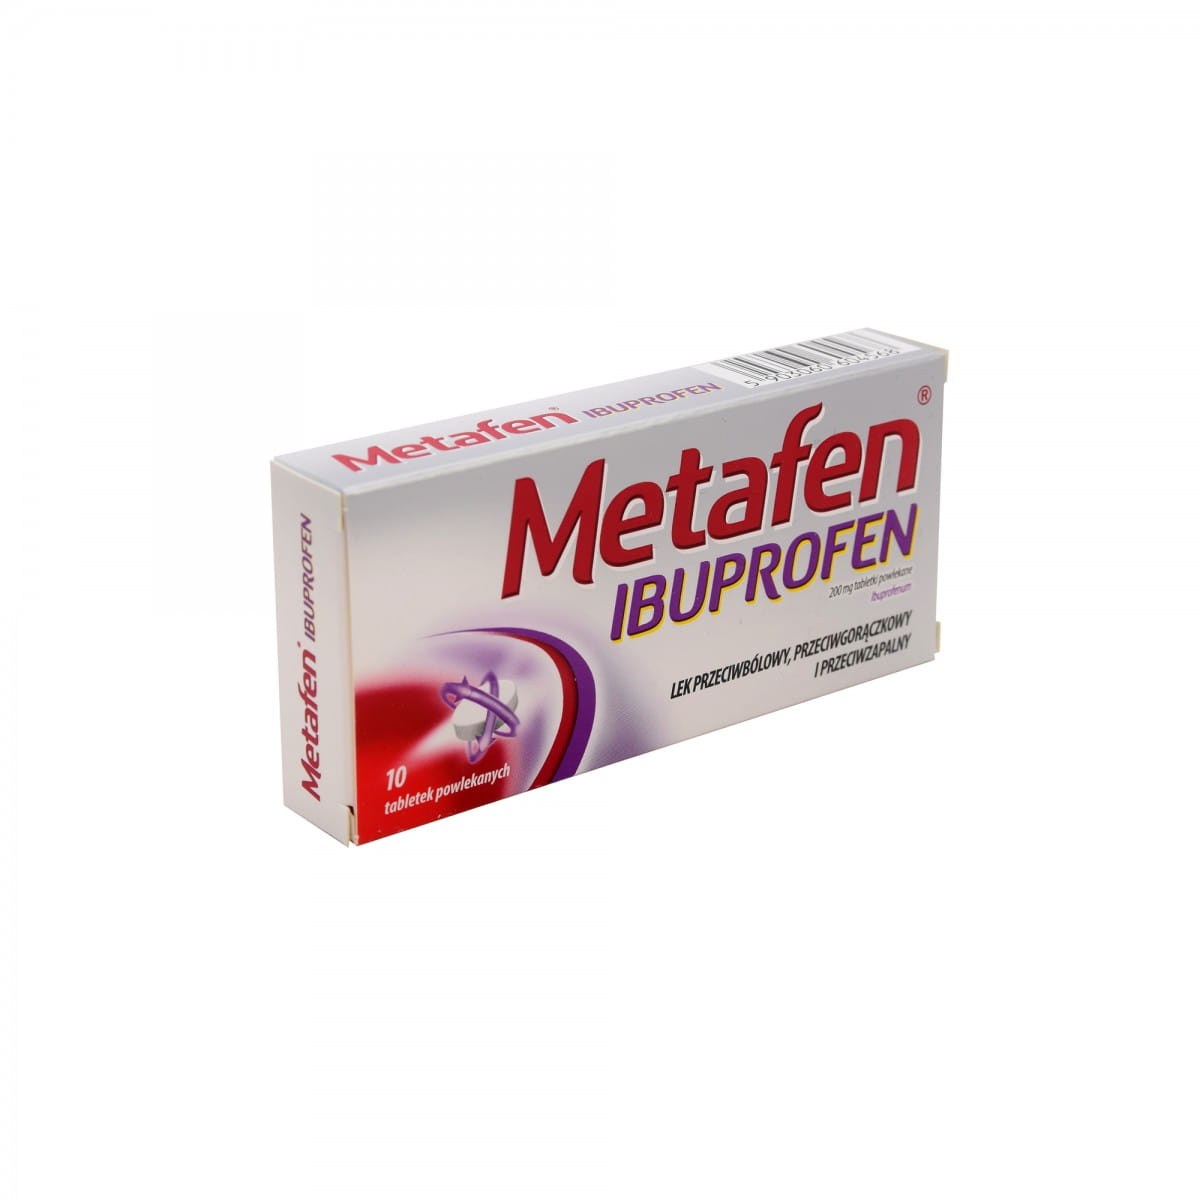 Metafen Ibuprofen 10 Tabletten